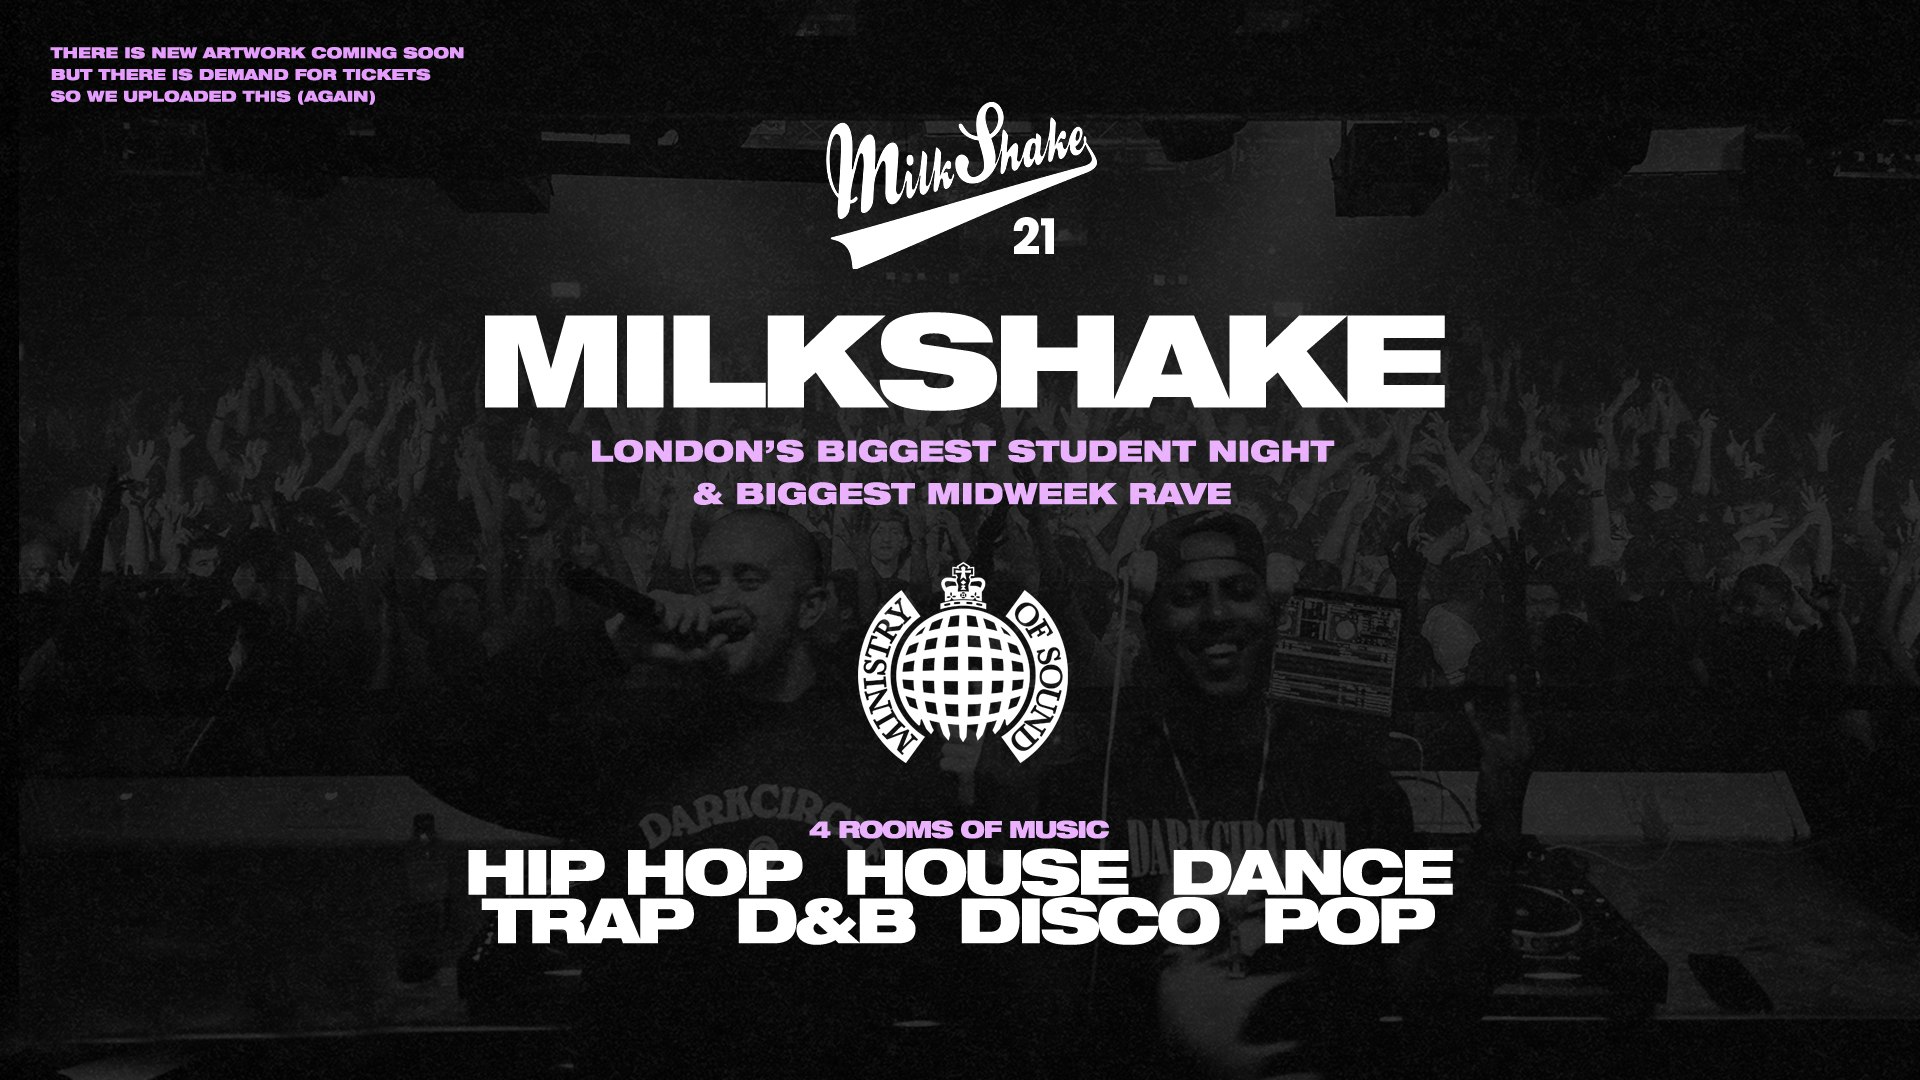 TONIGHT 10:30PM – Milkshake, Ministry of Sound | London’s Biggest Student Night 🔥 April 2nd  🌍